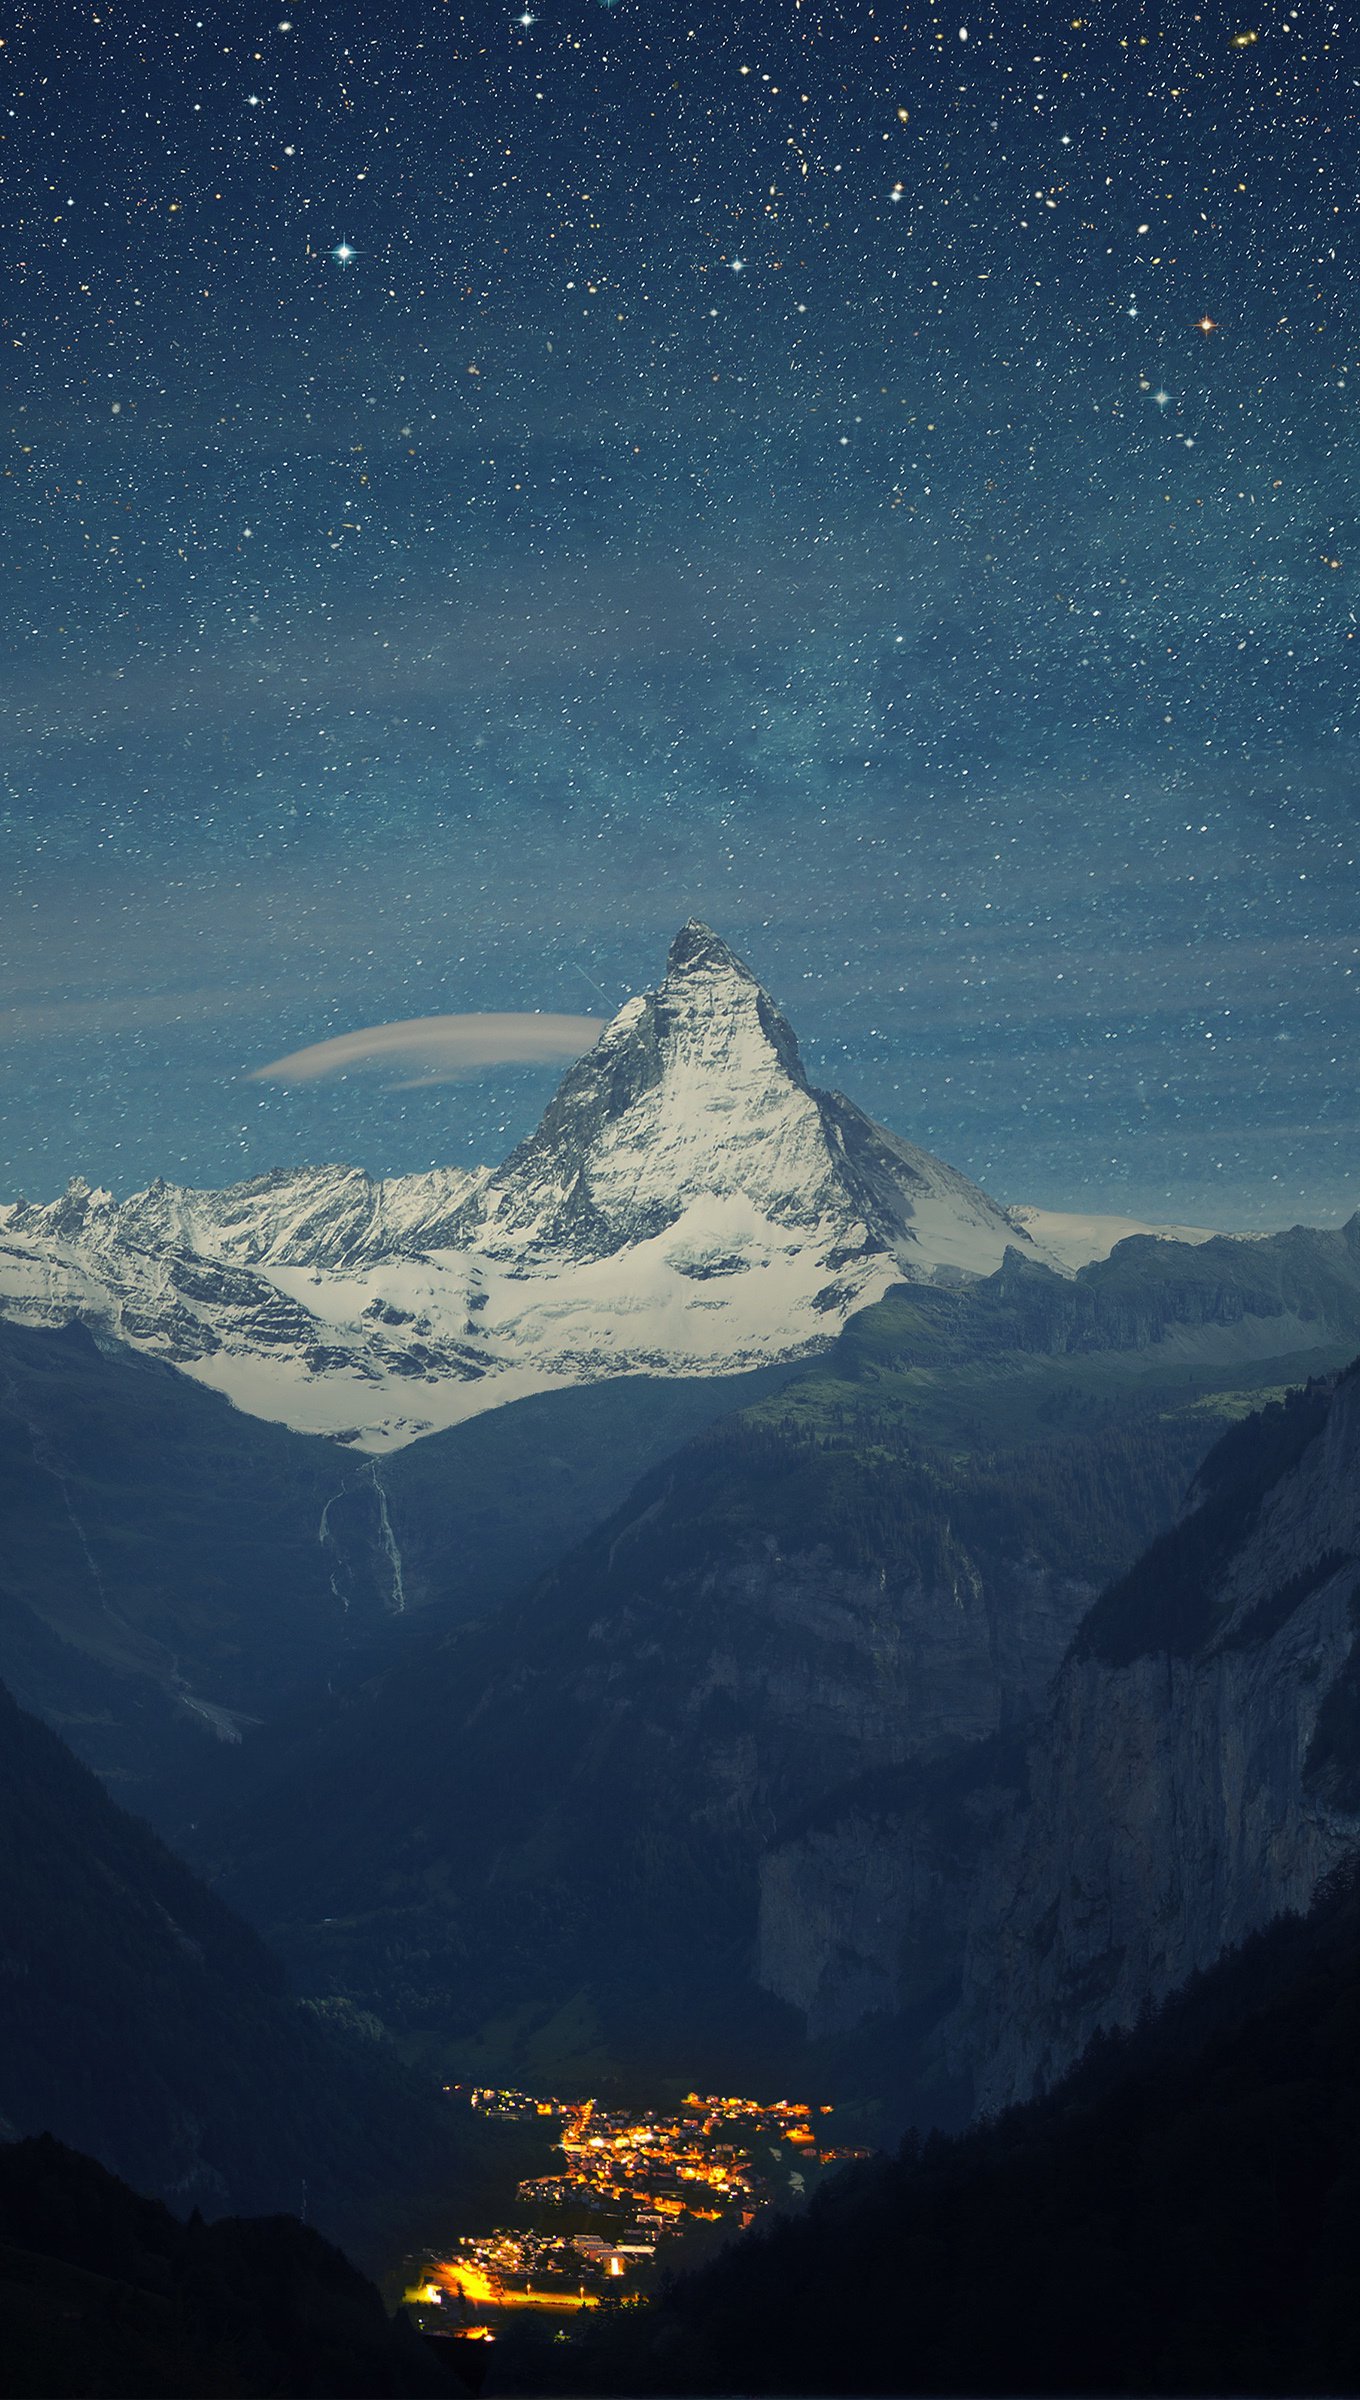 Fondos de pantalla Montañas nevadas con estrellas de noche Vertical